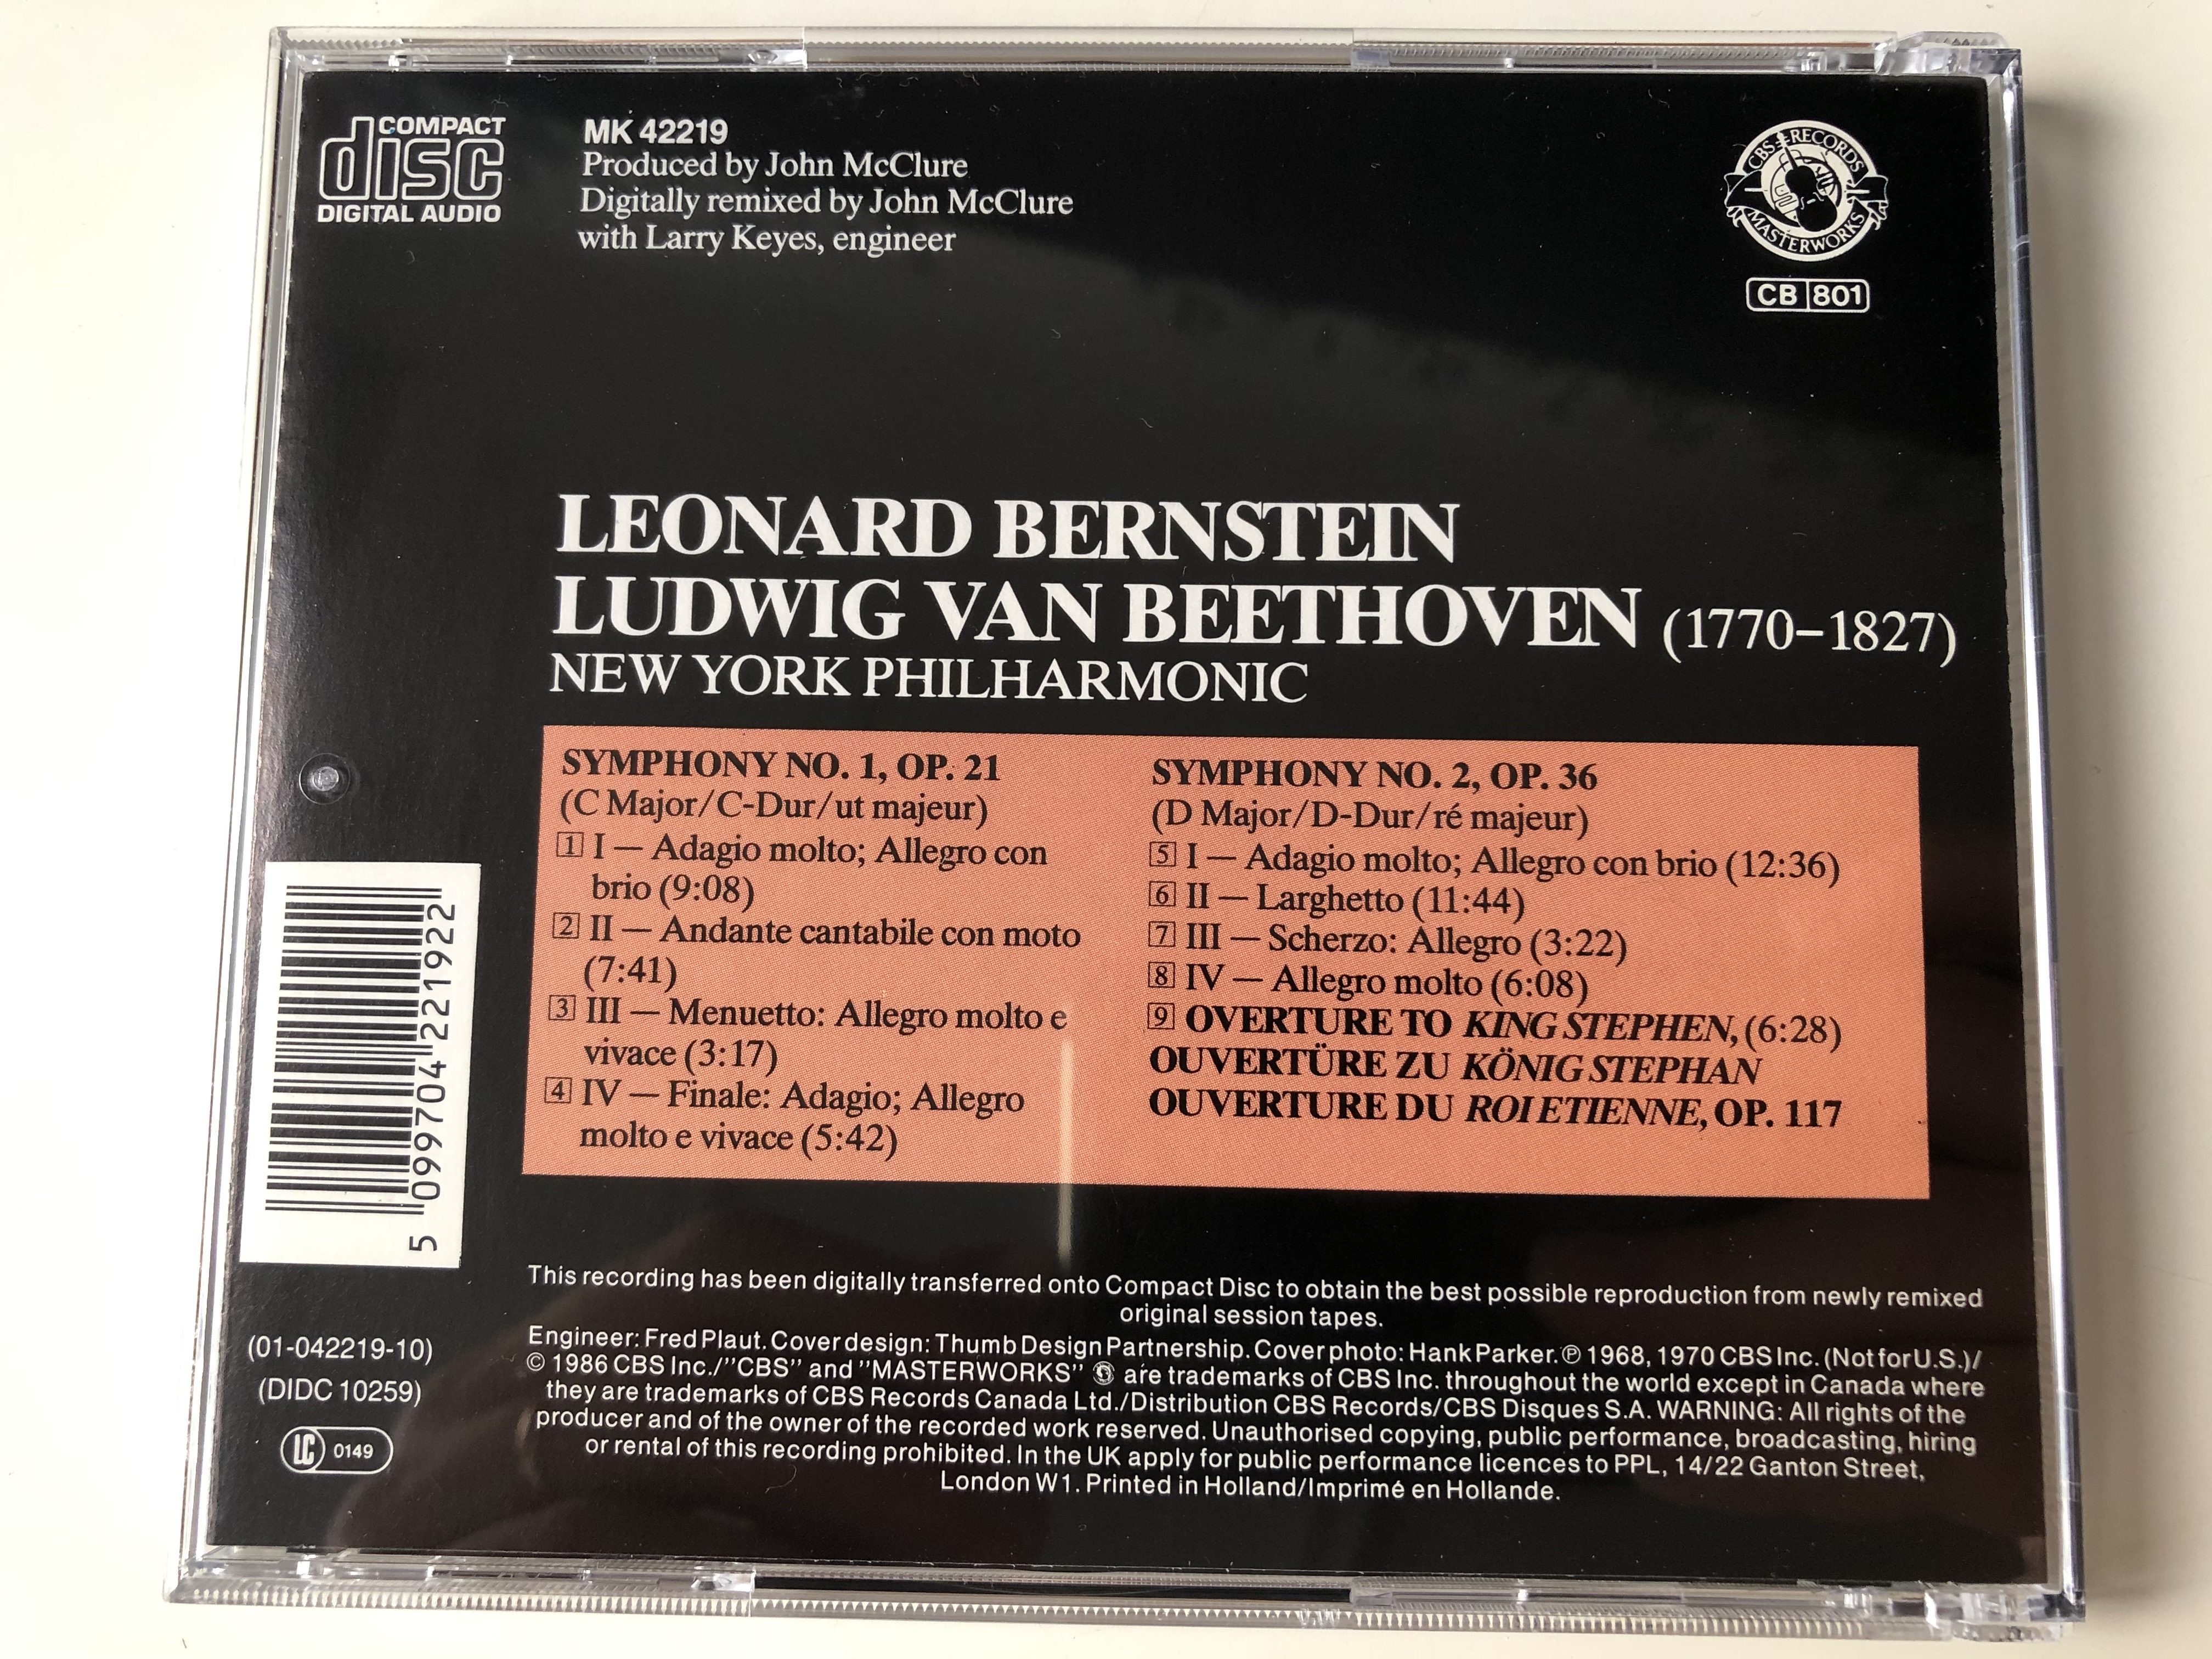 bernstein-beethoven-symphony-no.-1-symphony-no.-2-konig-stephan-overture-new-york-philharmonic-orchestra-cbs-masterworks-audio-cd-1986-stereo-mk-42219-4-.jpg